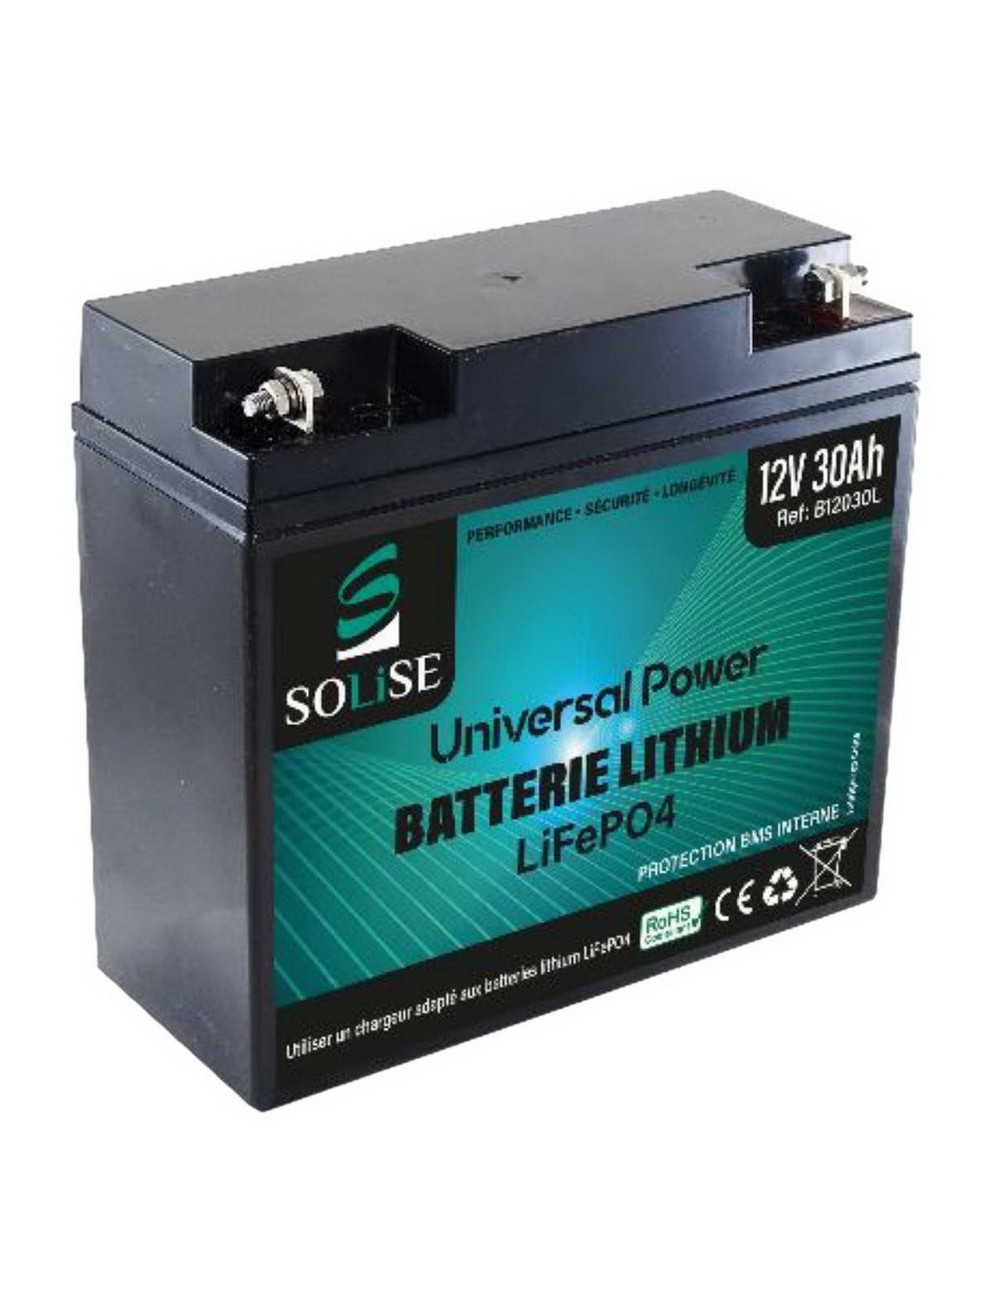 Seizoen Trots Madeliefje RNS B12030L (B12030L) LiFePO4 Batterij 12V Solise (12V - 30Ah) | Mister  Battery